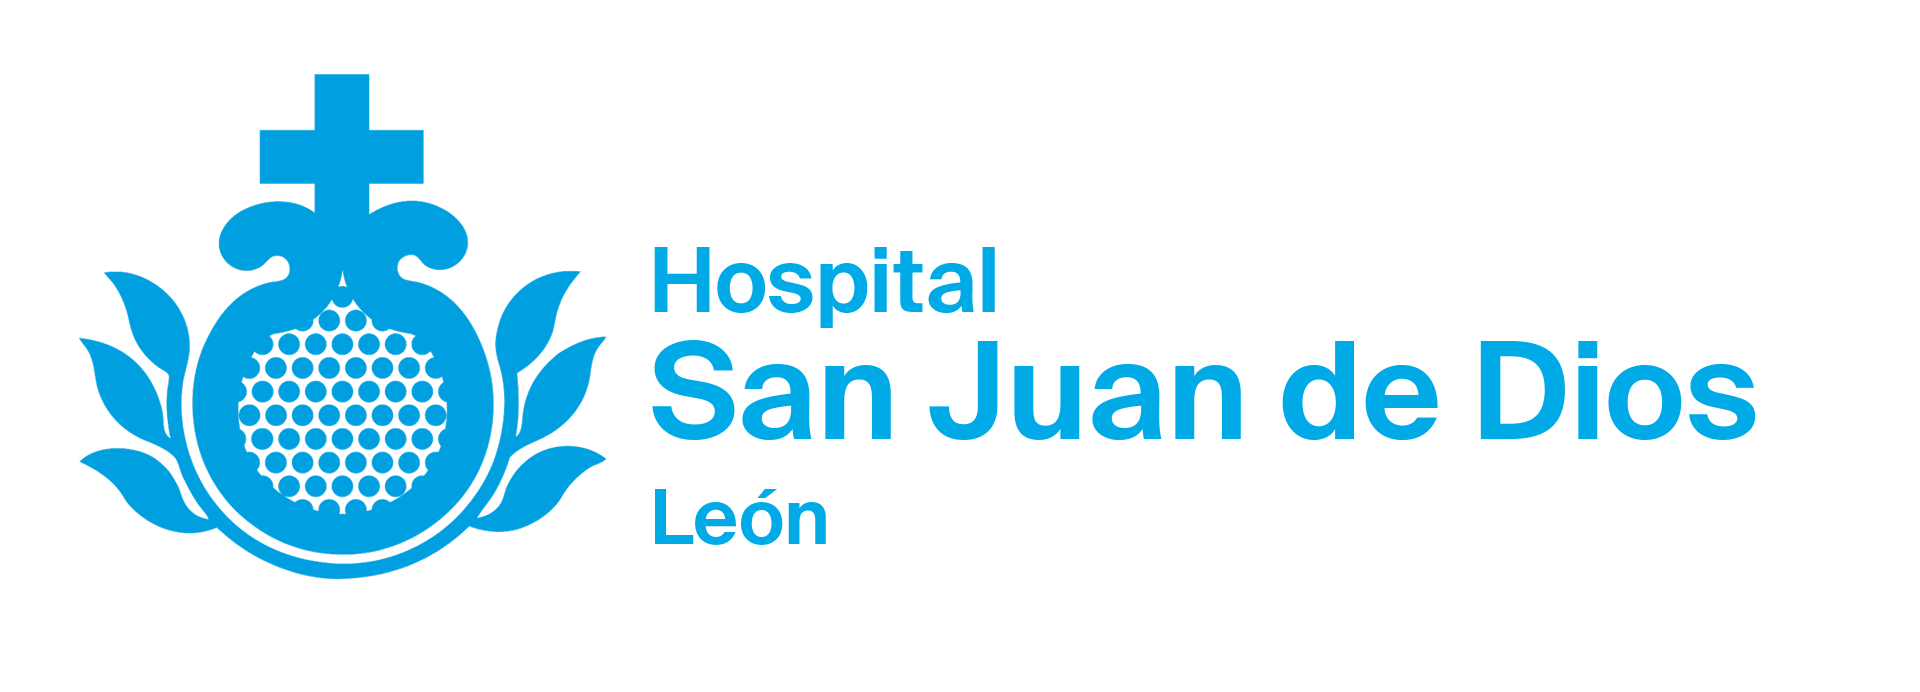 Hospital San Juan de Dios León